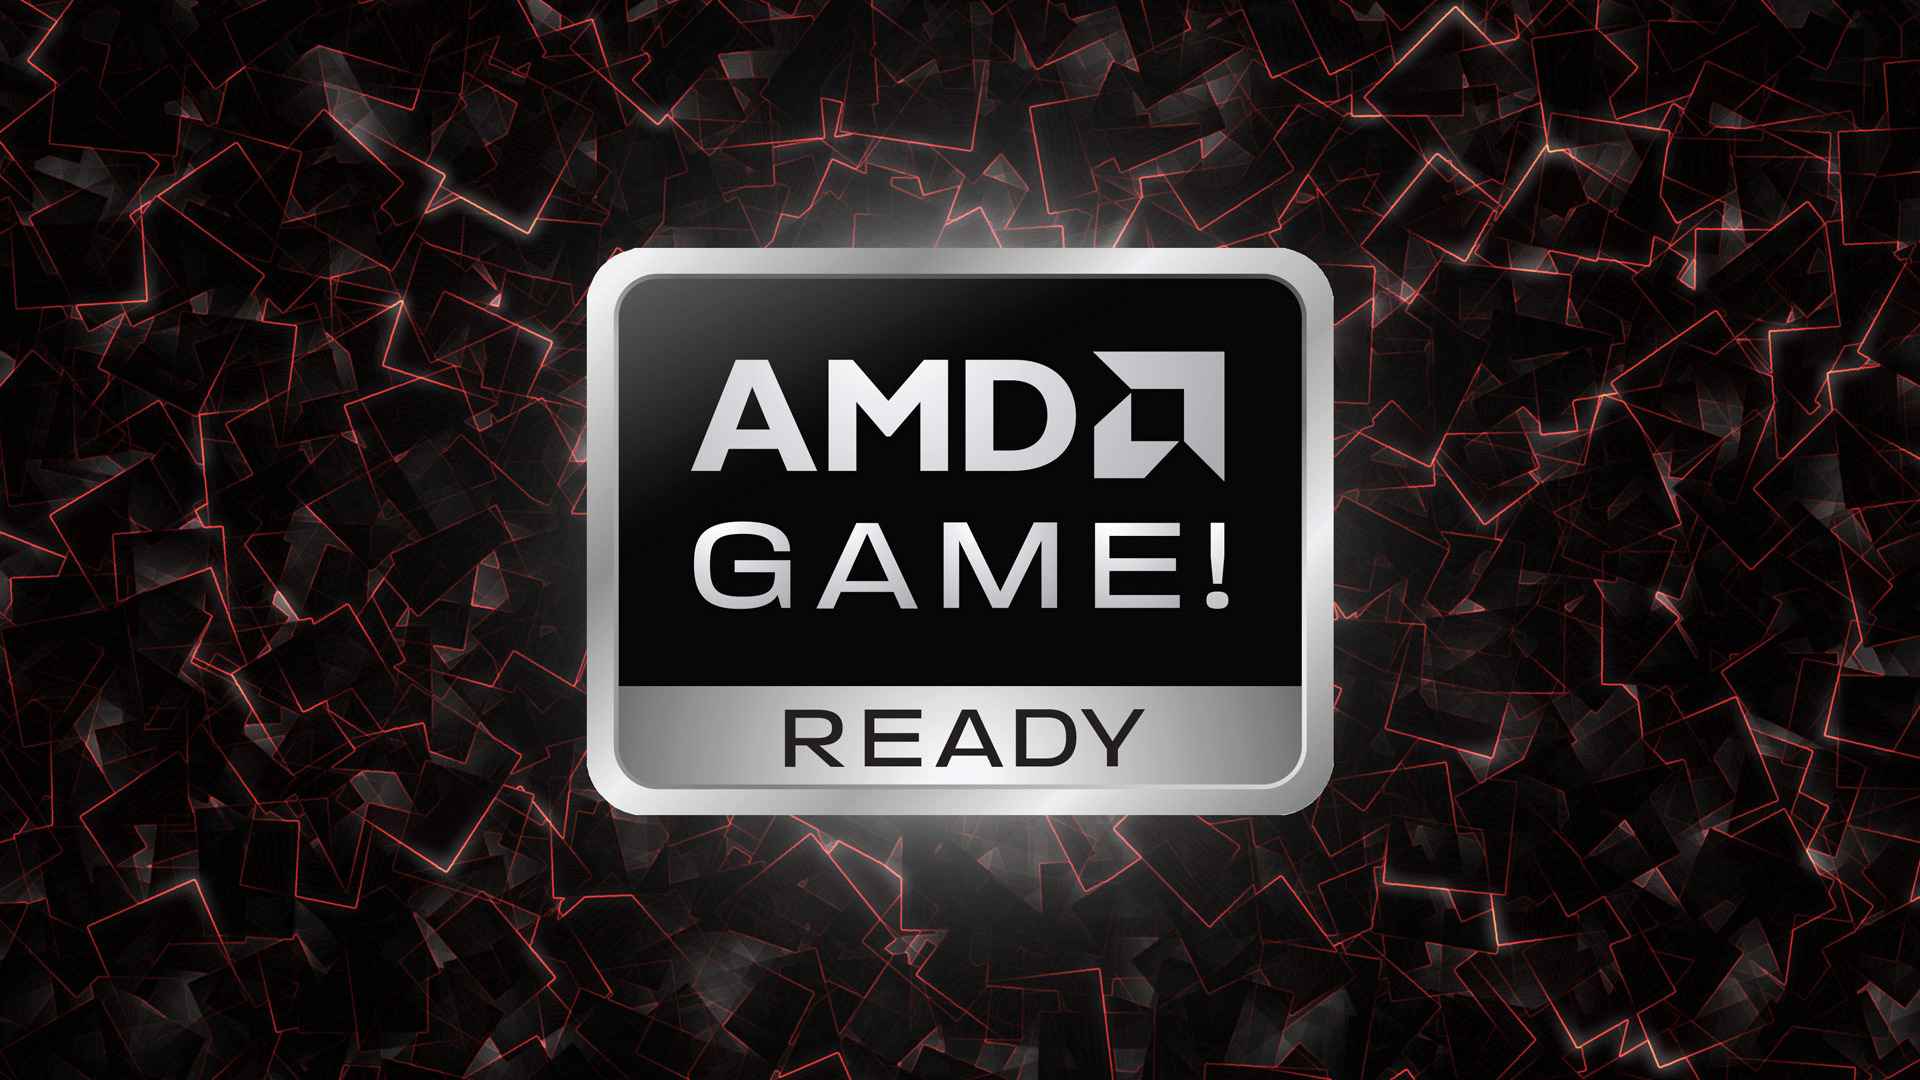  43 AMD Gaming  Wallpaper on WallpaperSafari